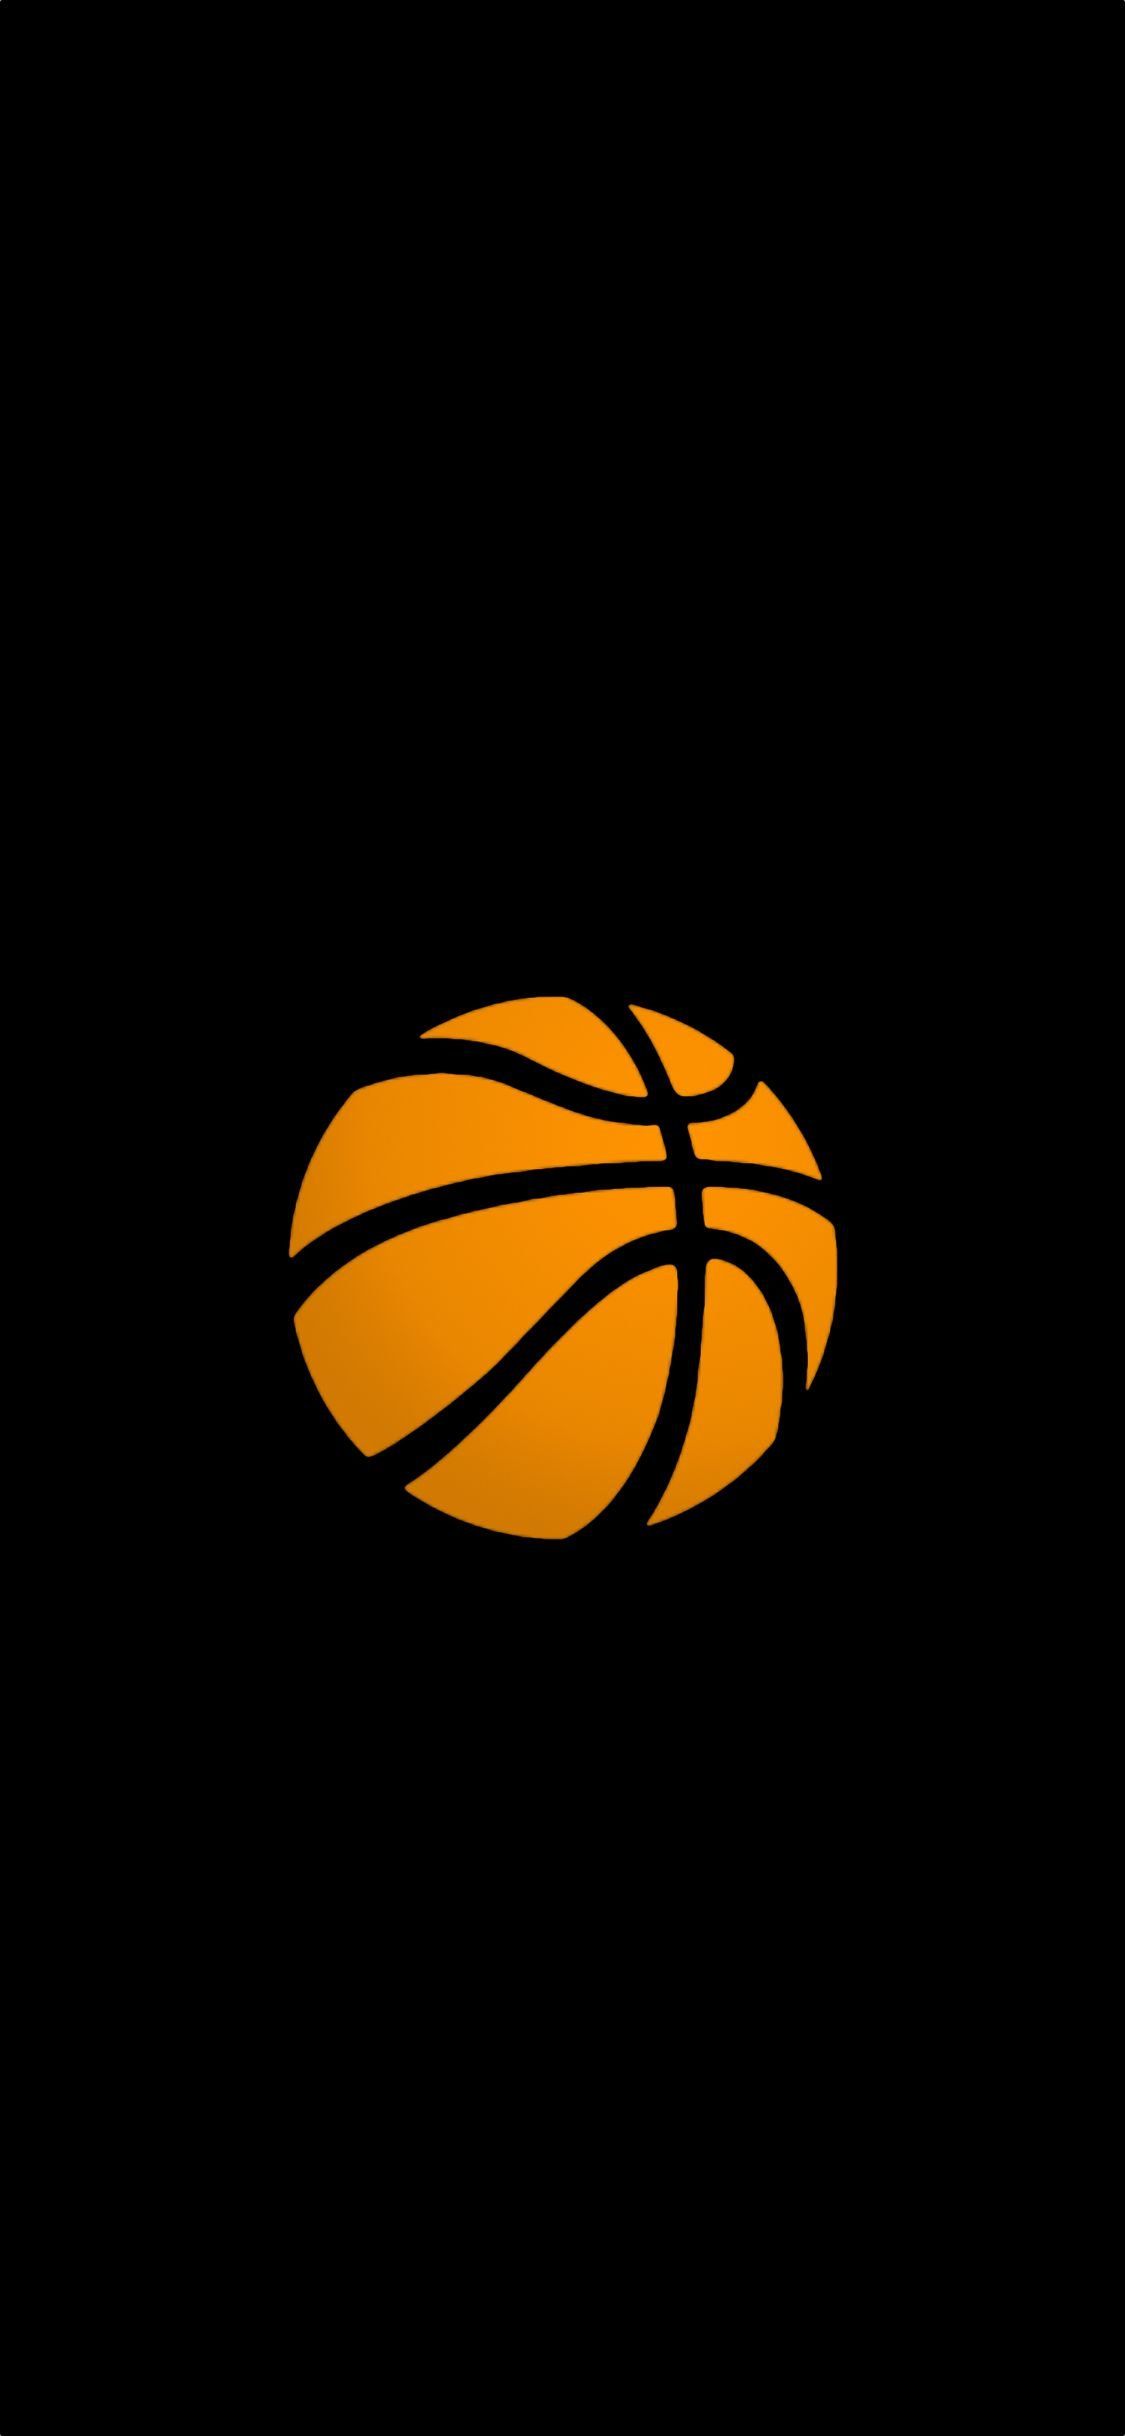 iPhone White Basketball Wallpaper